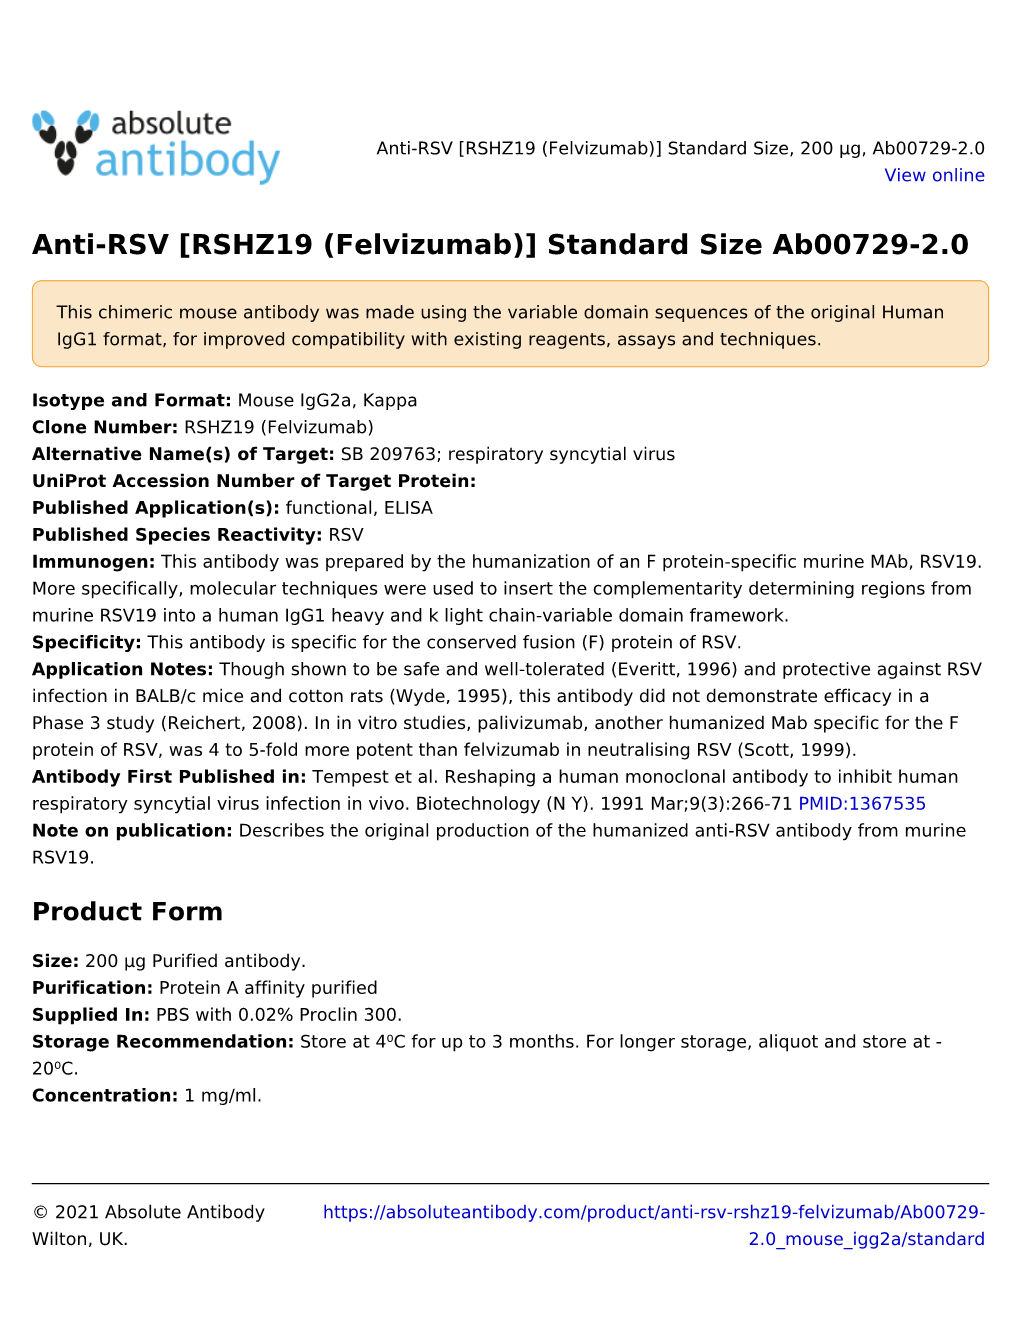 Anti-RSV [RSHZ19 (Felvizumab)] Standard Size Ab00729-2.0